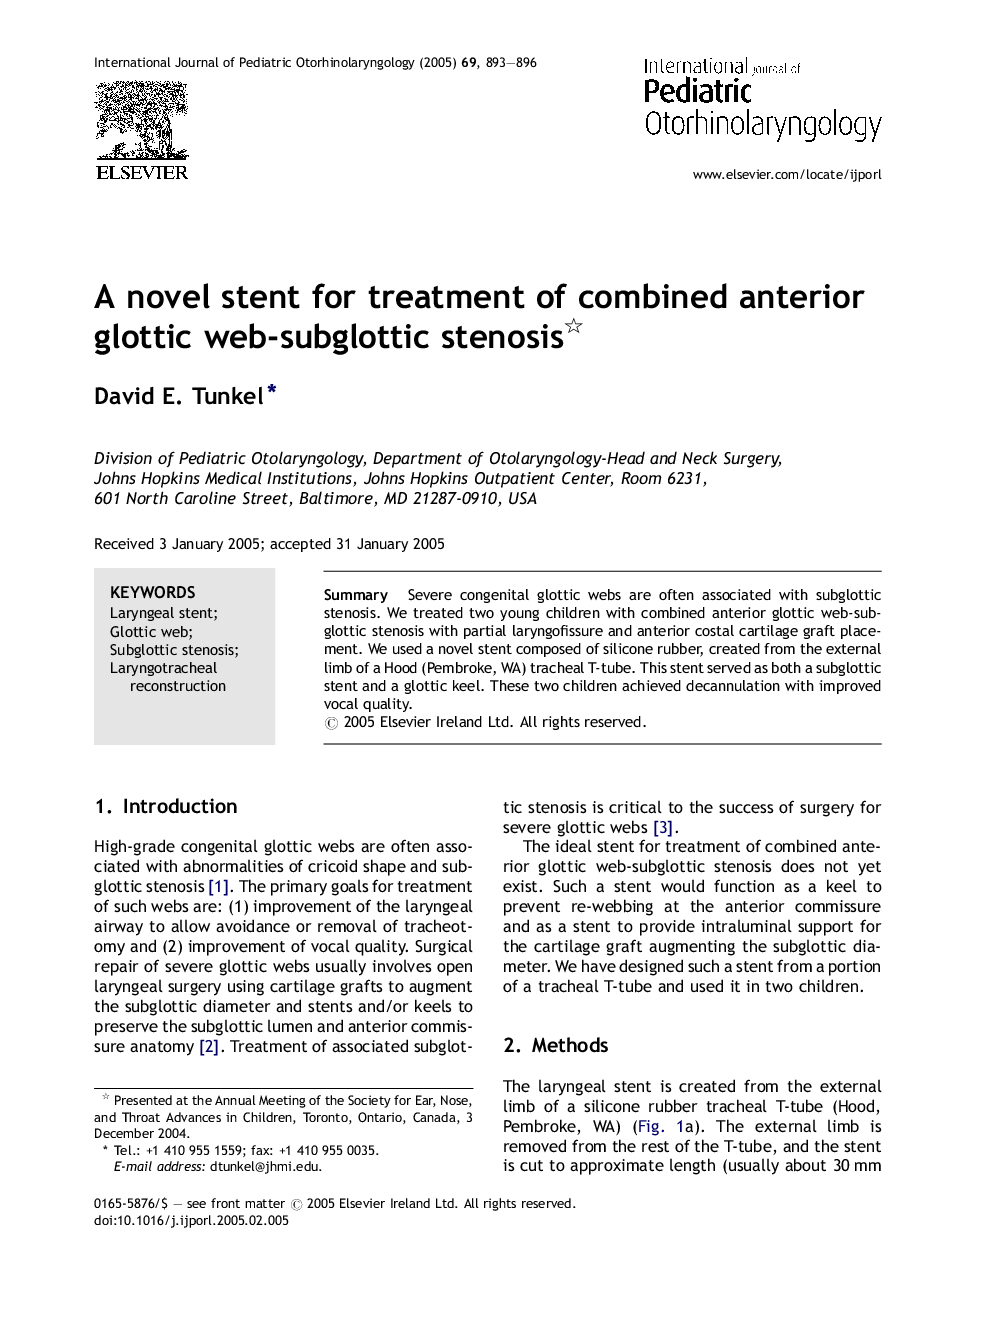 A novel stent for treatment of combined anterior glottic web-subglottic stenosis